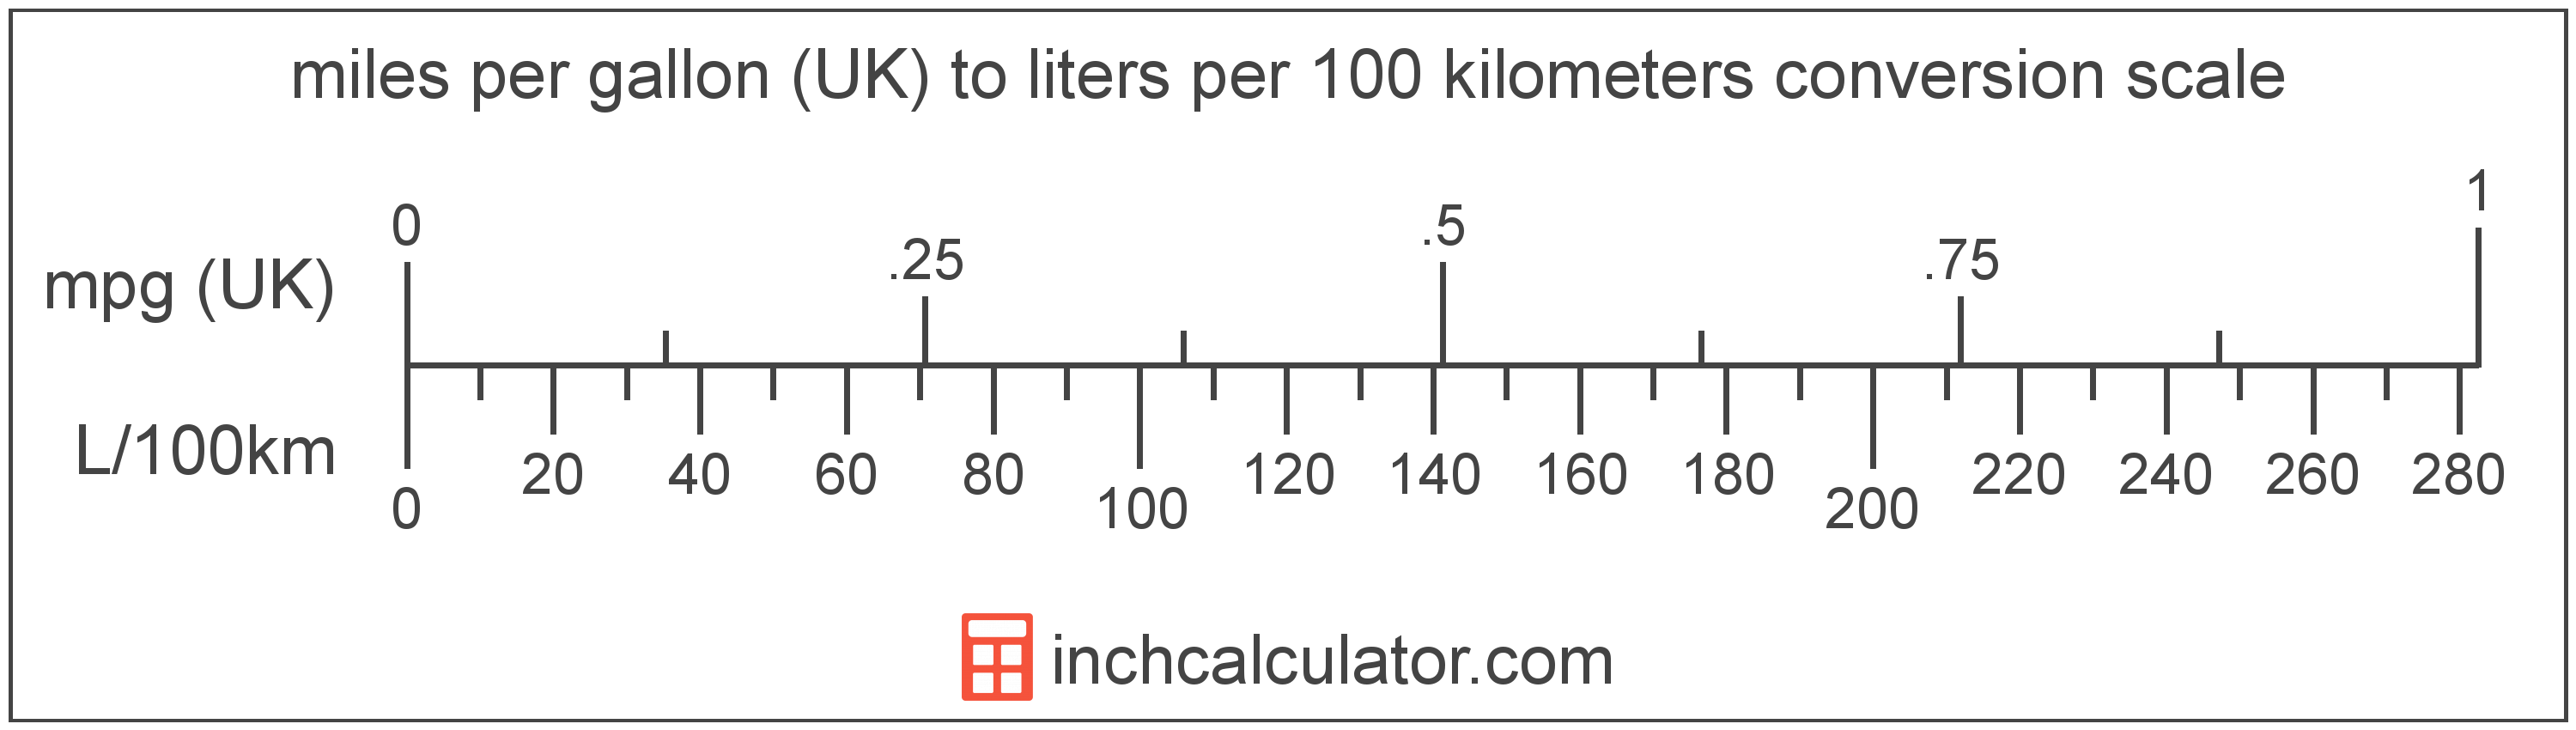 conversion scale showing liters per 100 kilometers and equivalent miles per gallon (UK) fuel economy values